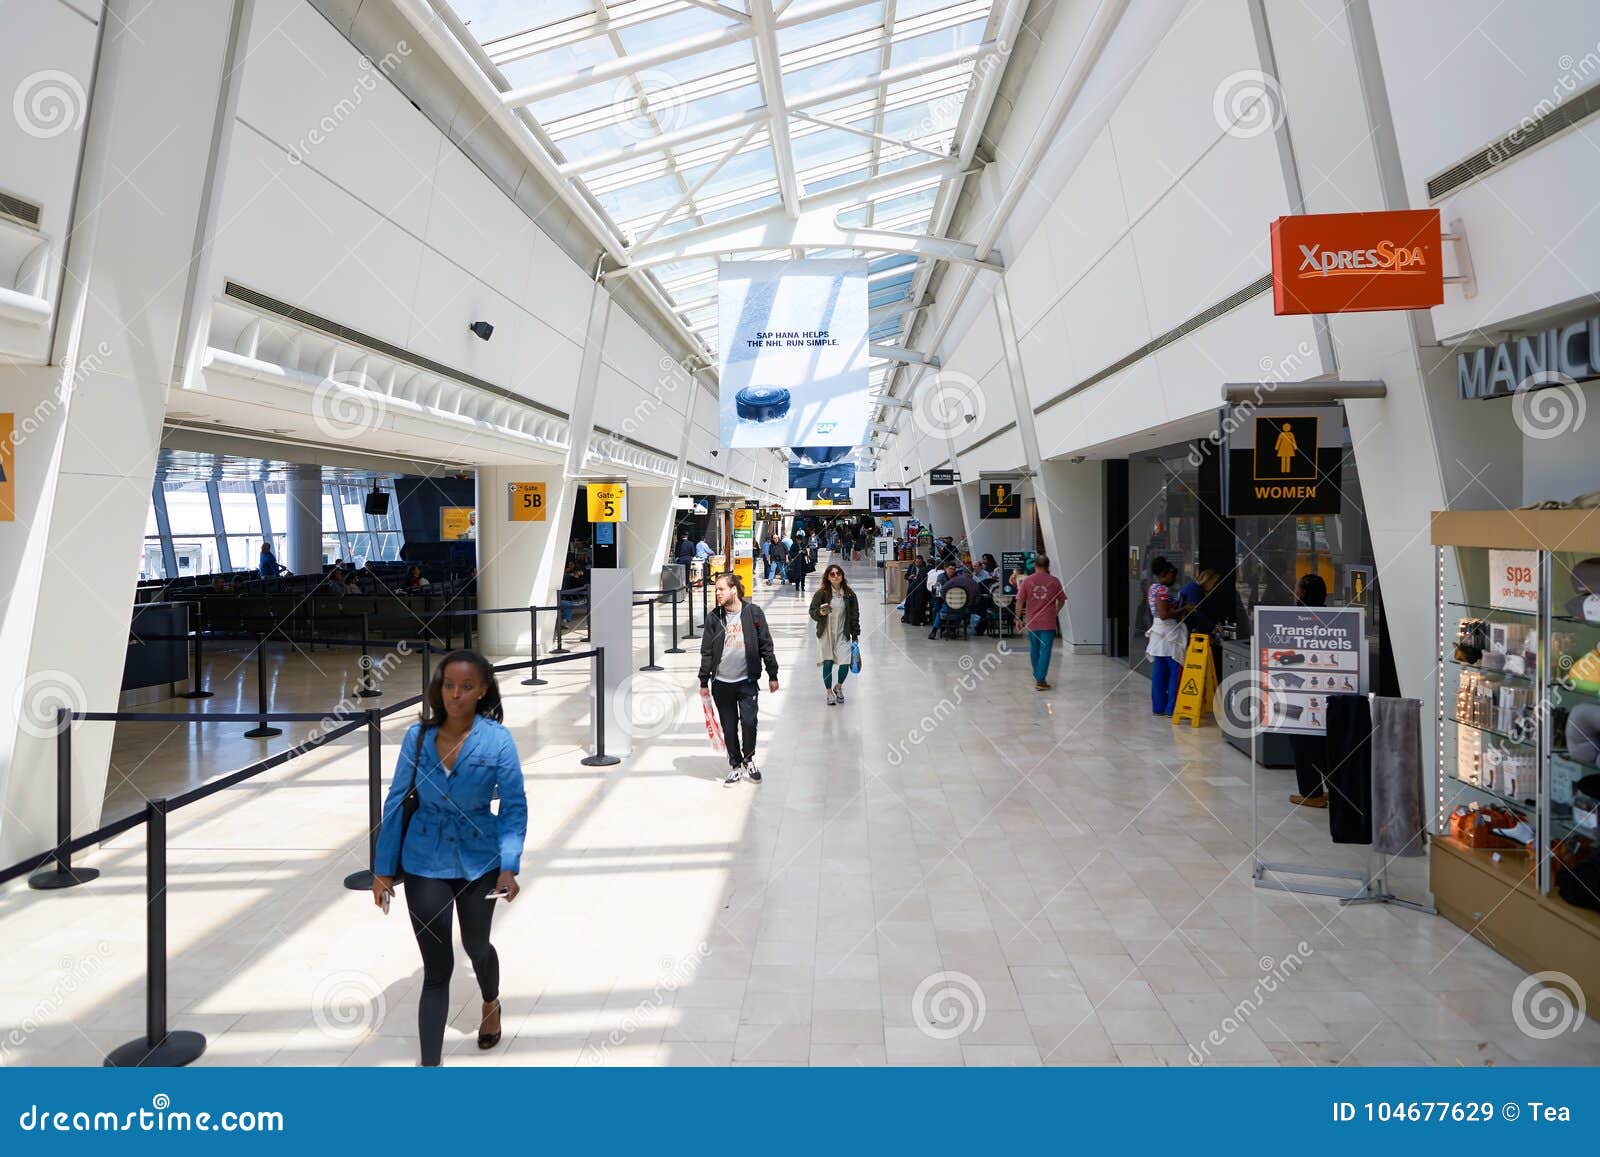 Jfk Editorial Stock Image Image Of Interior Airport